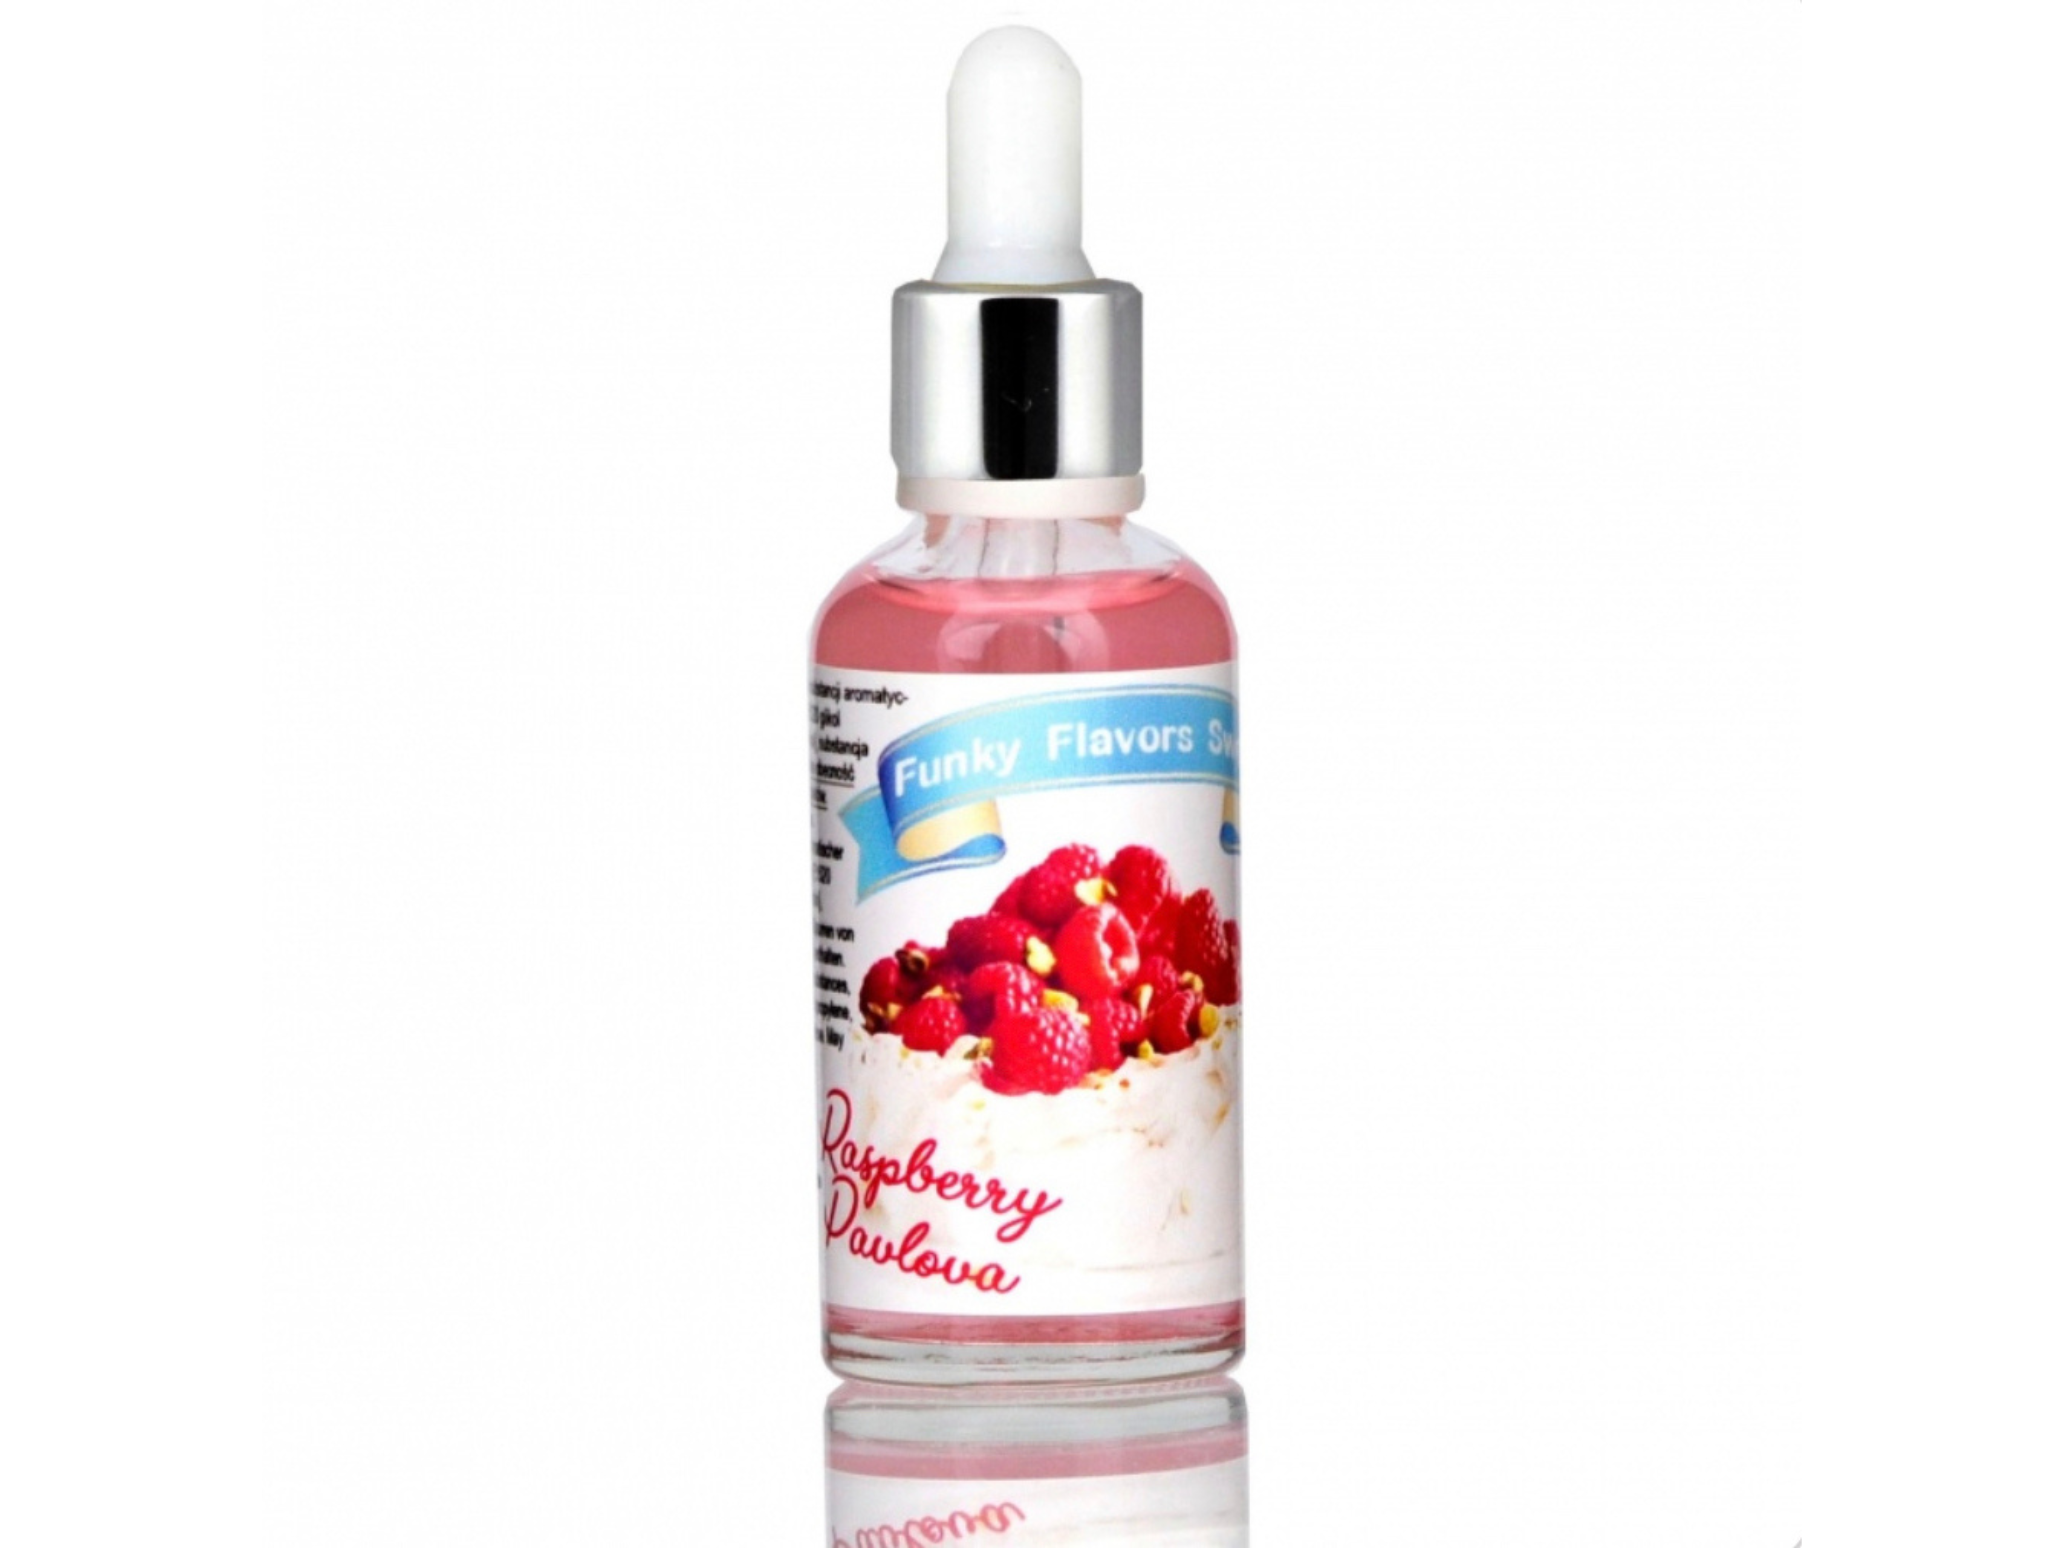 Funky Flavors Raspberry Pavlova – recenzja